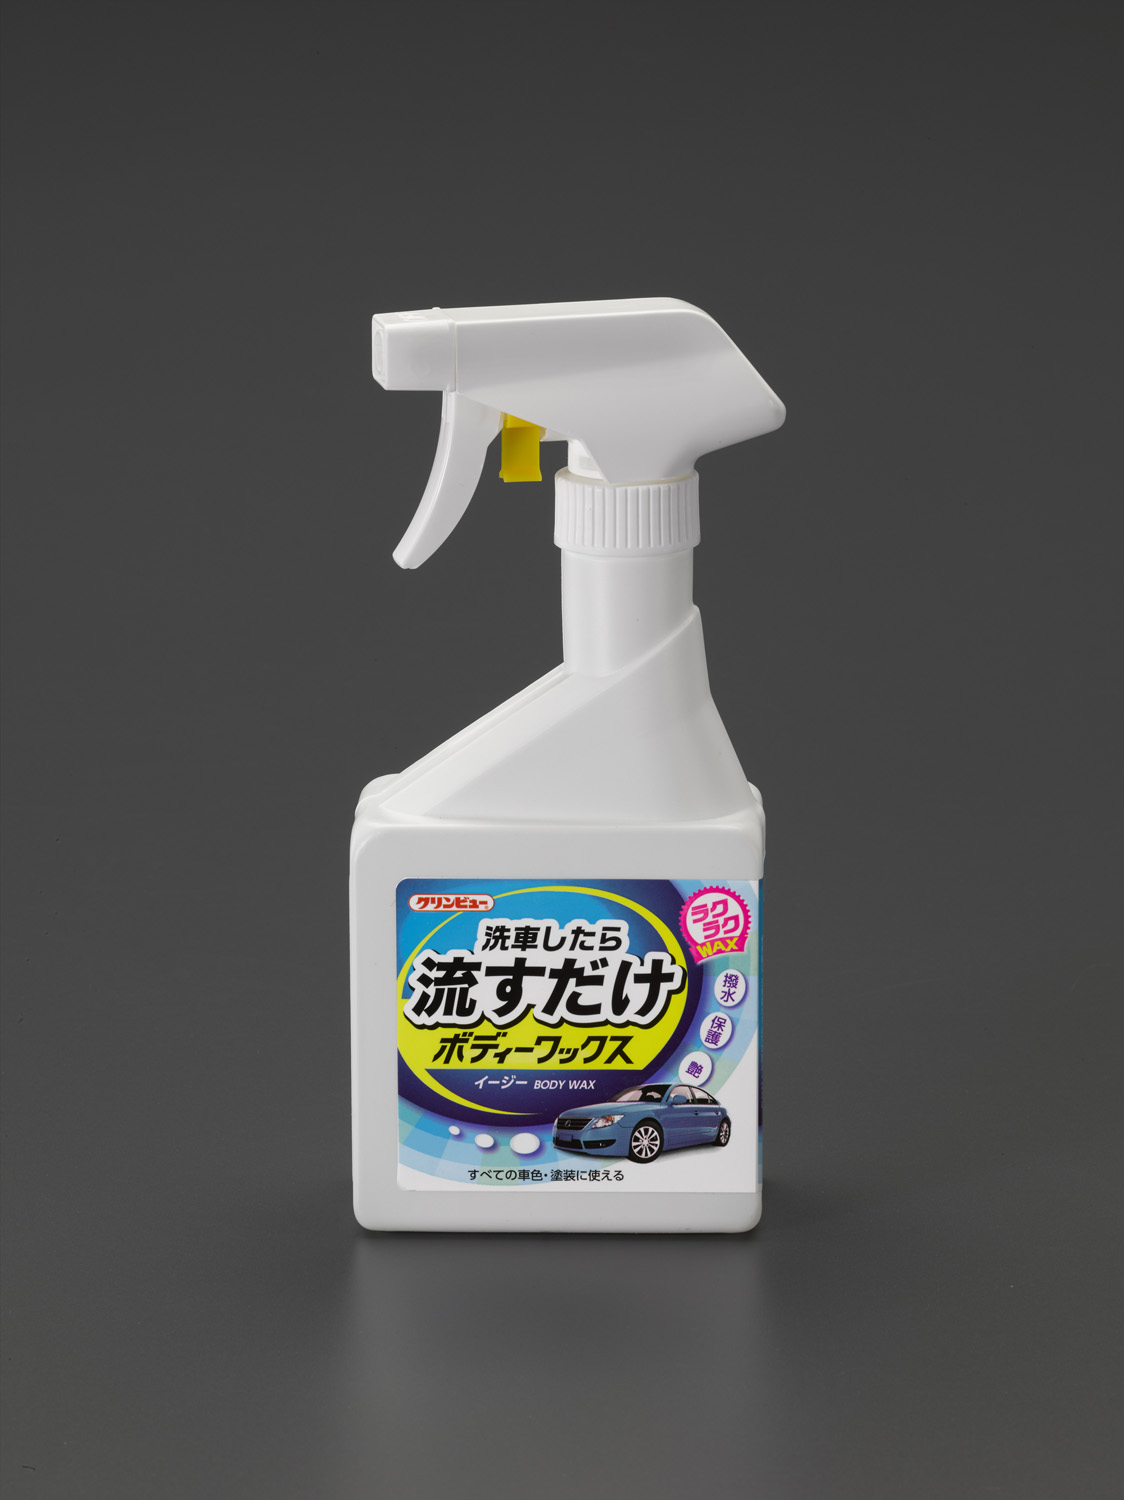 Ea922bm 11a 400ml 洗車 ワックススプレーのページ Sakkey エスコの商品を検索